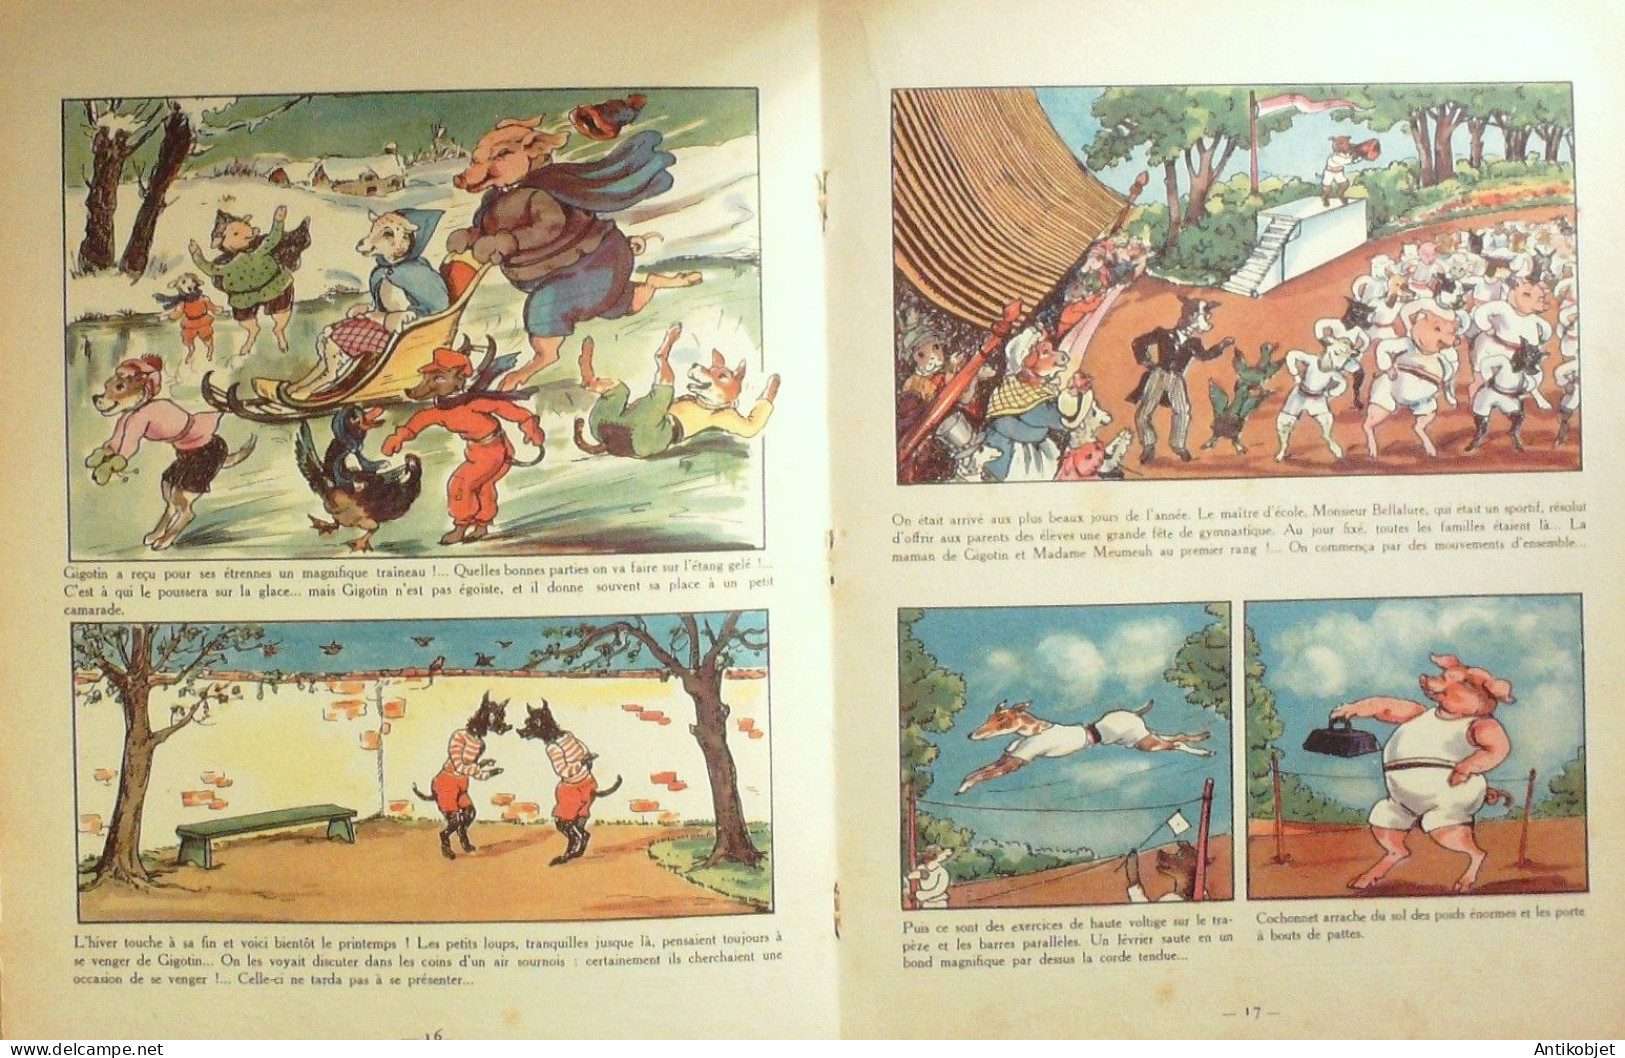 Gigotin Illustrations Mateja Eo 1948 - 5. Guerre Mondiali